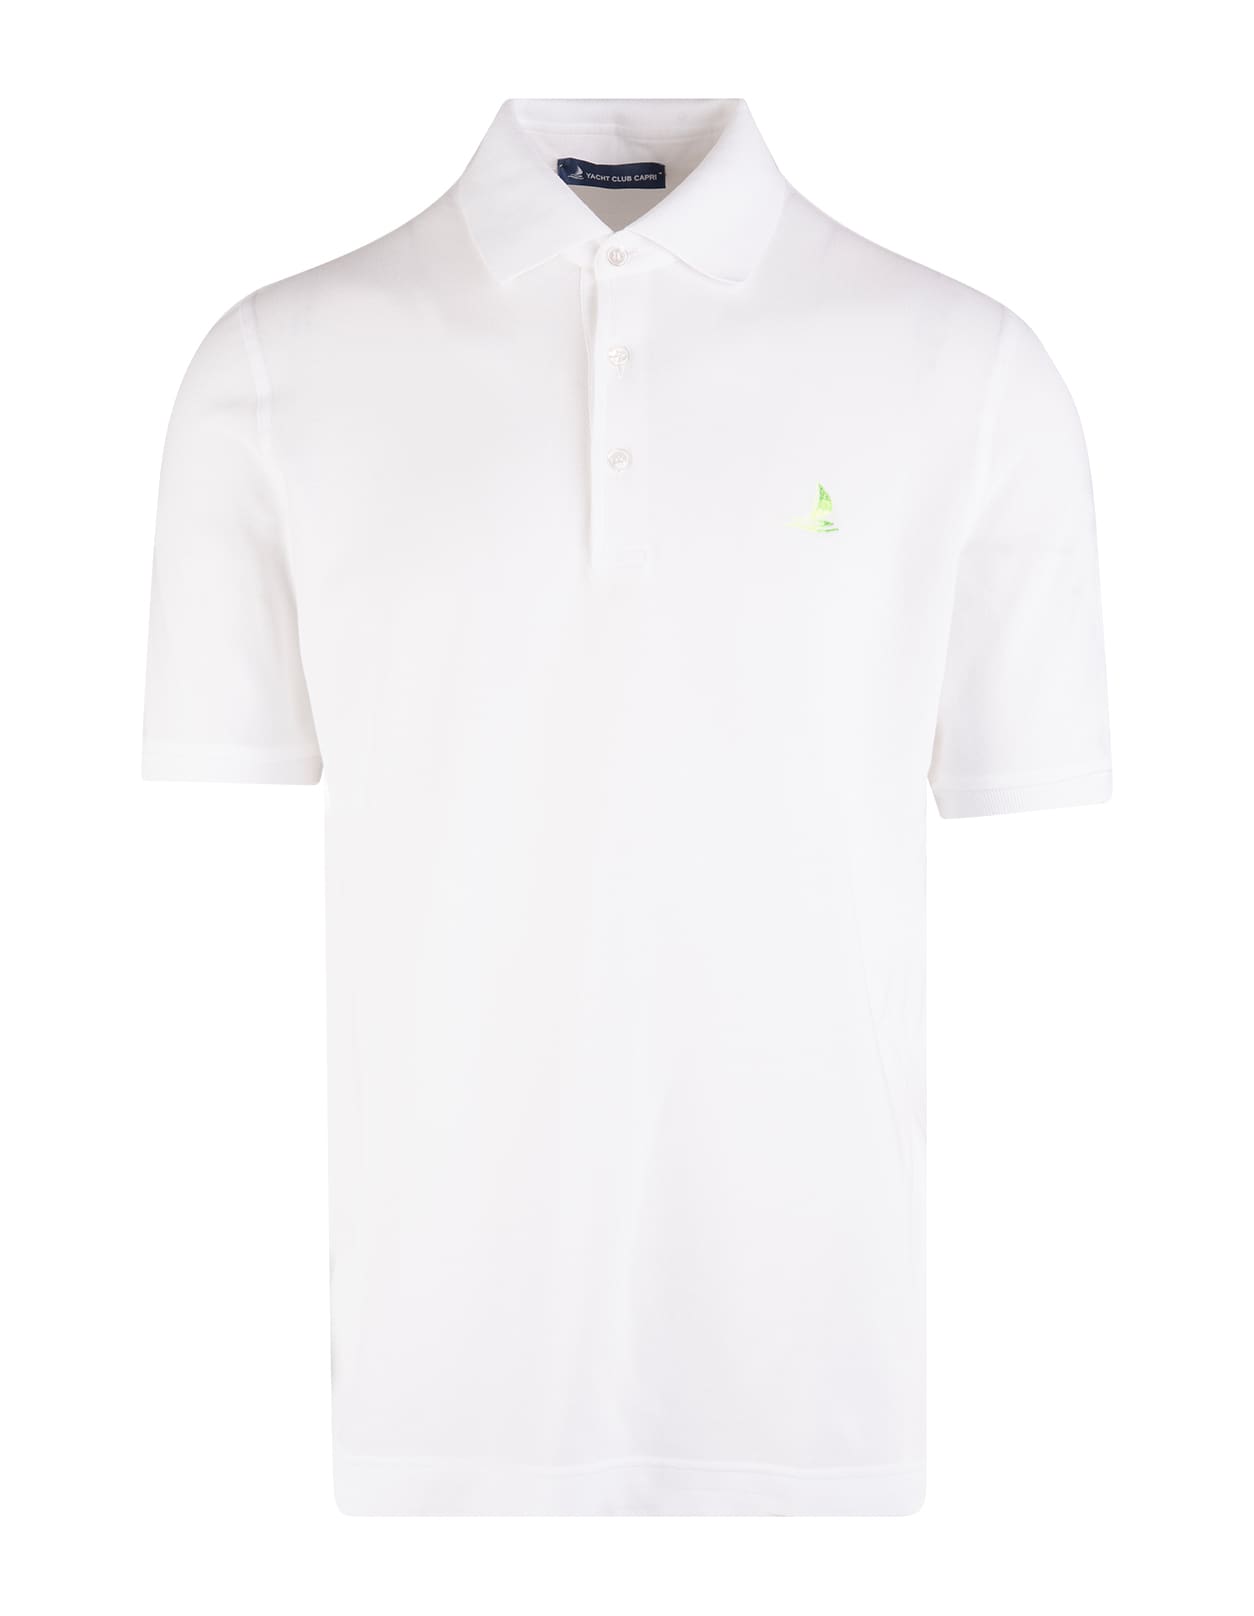 Fedeli Man - White Pique Polo Shirt With Green Yacht Club Capri Logo